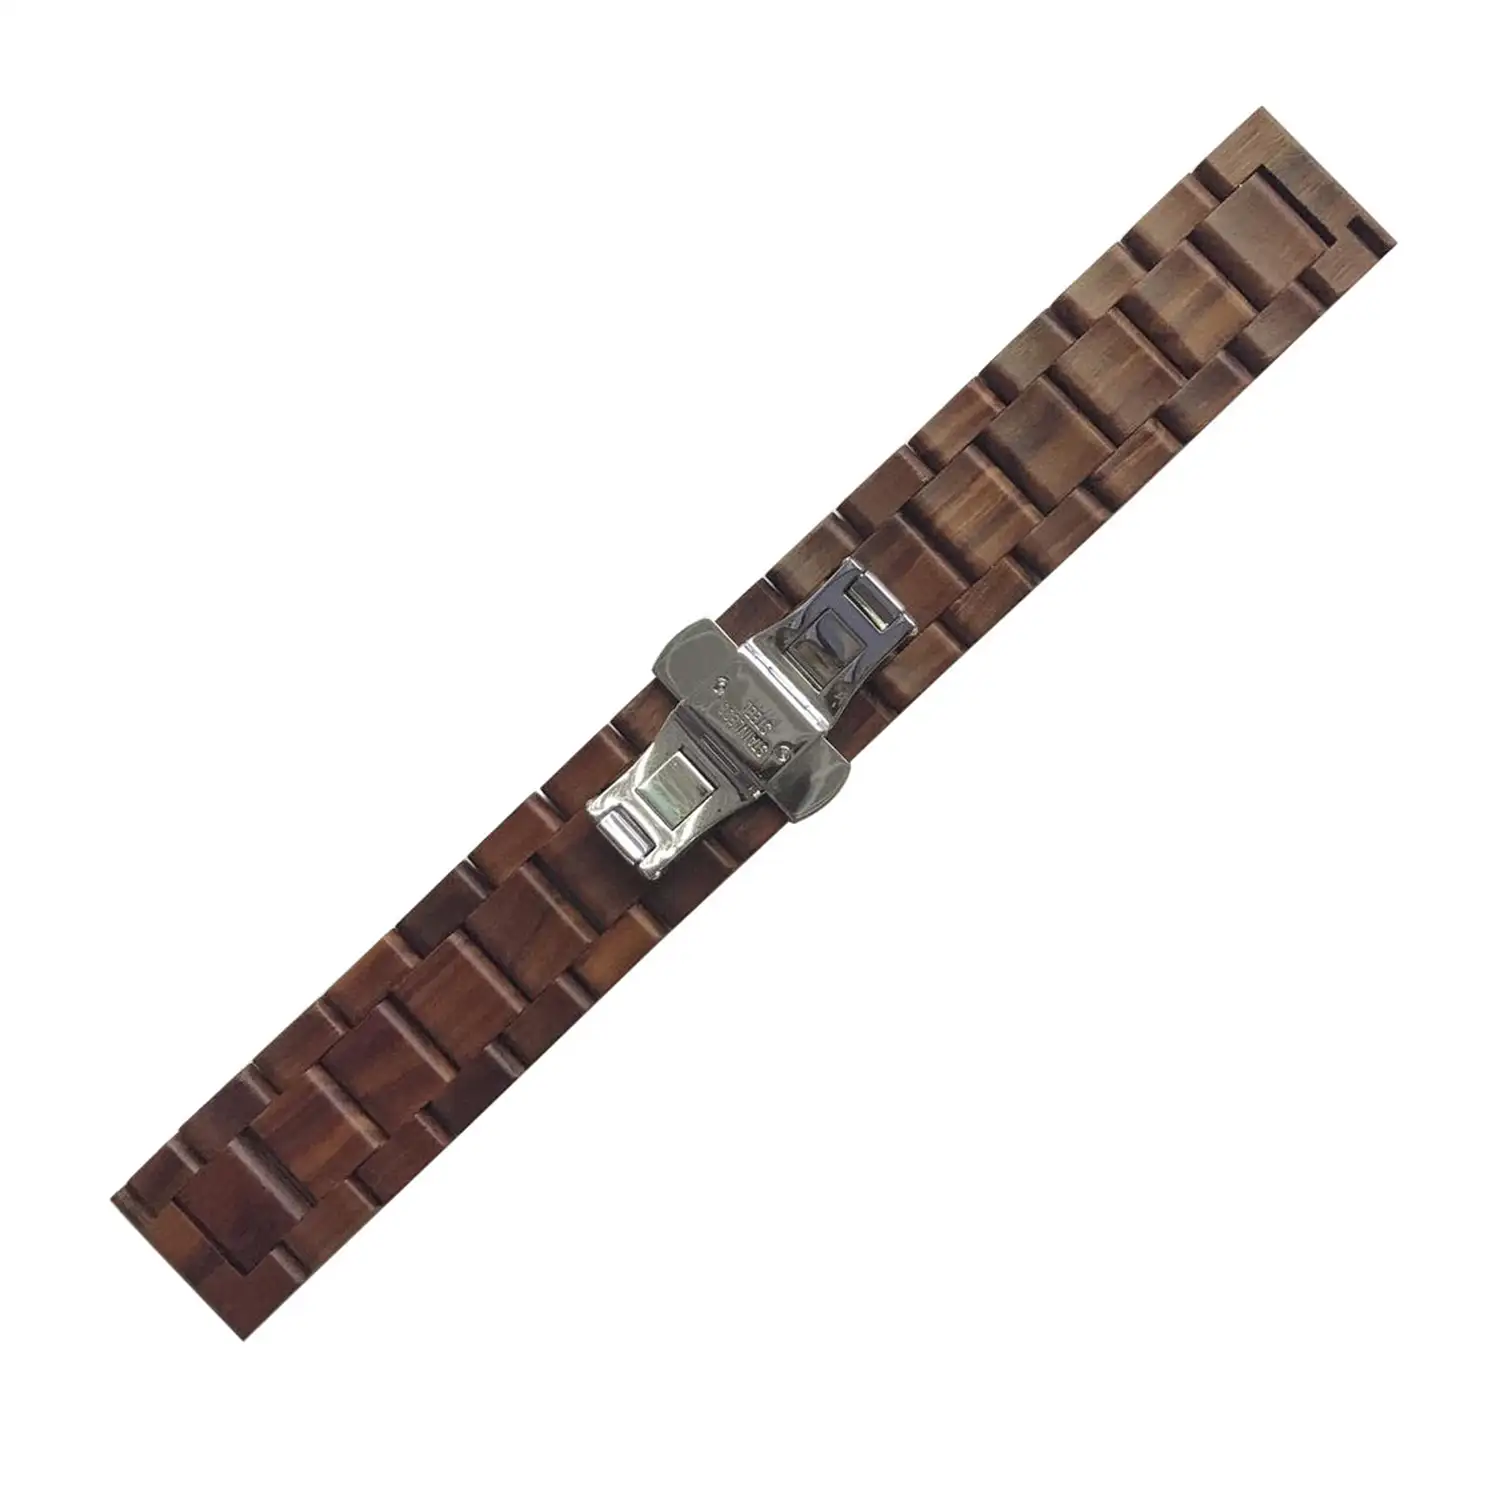 Correa universal de madera natural bambú para relojes de 22mm.Sistema Quick Release de fácil cambio.